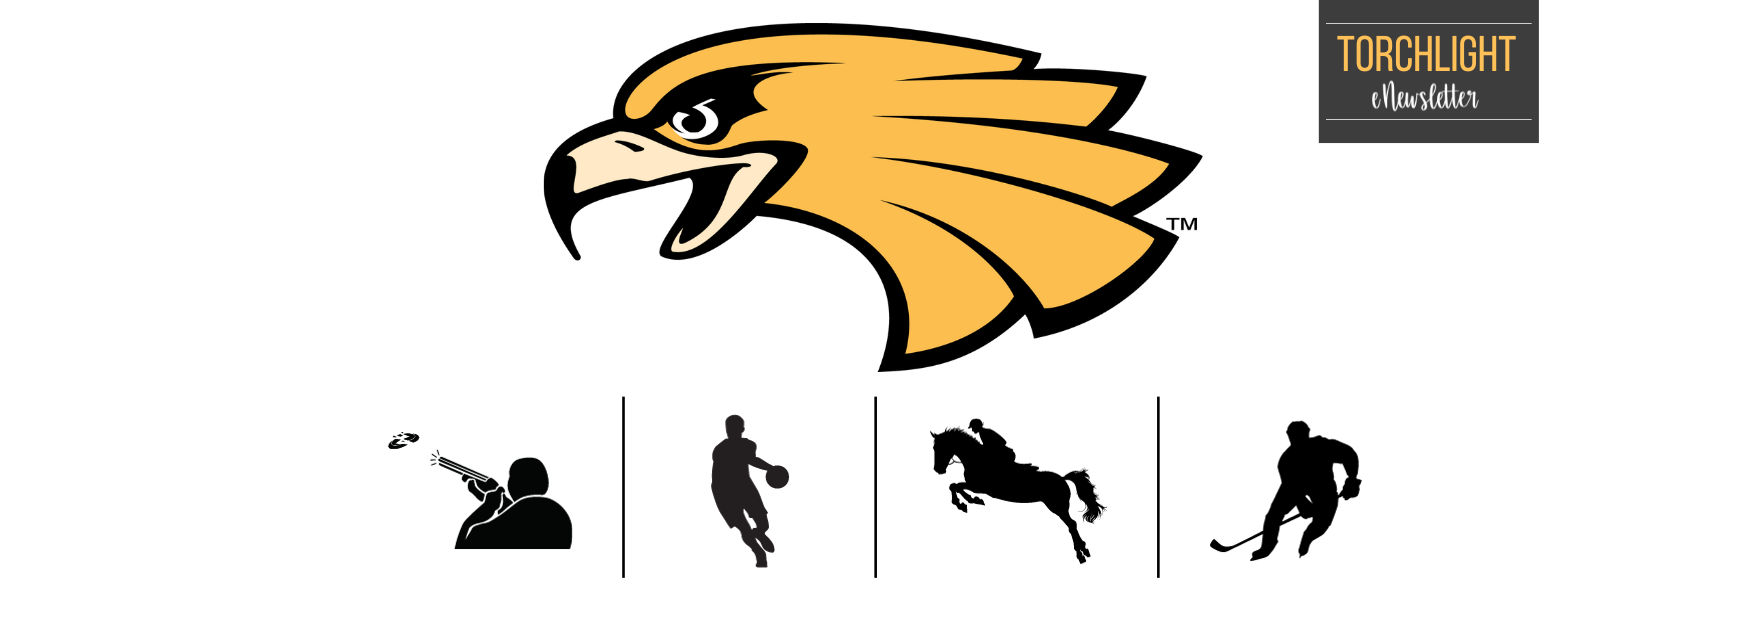 Golden Eagle Trap, Basketball, Equestrian and Hockey logos